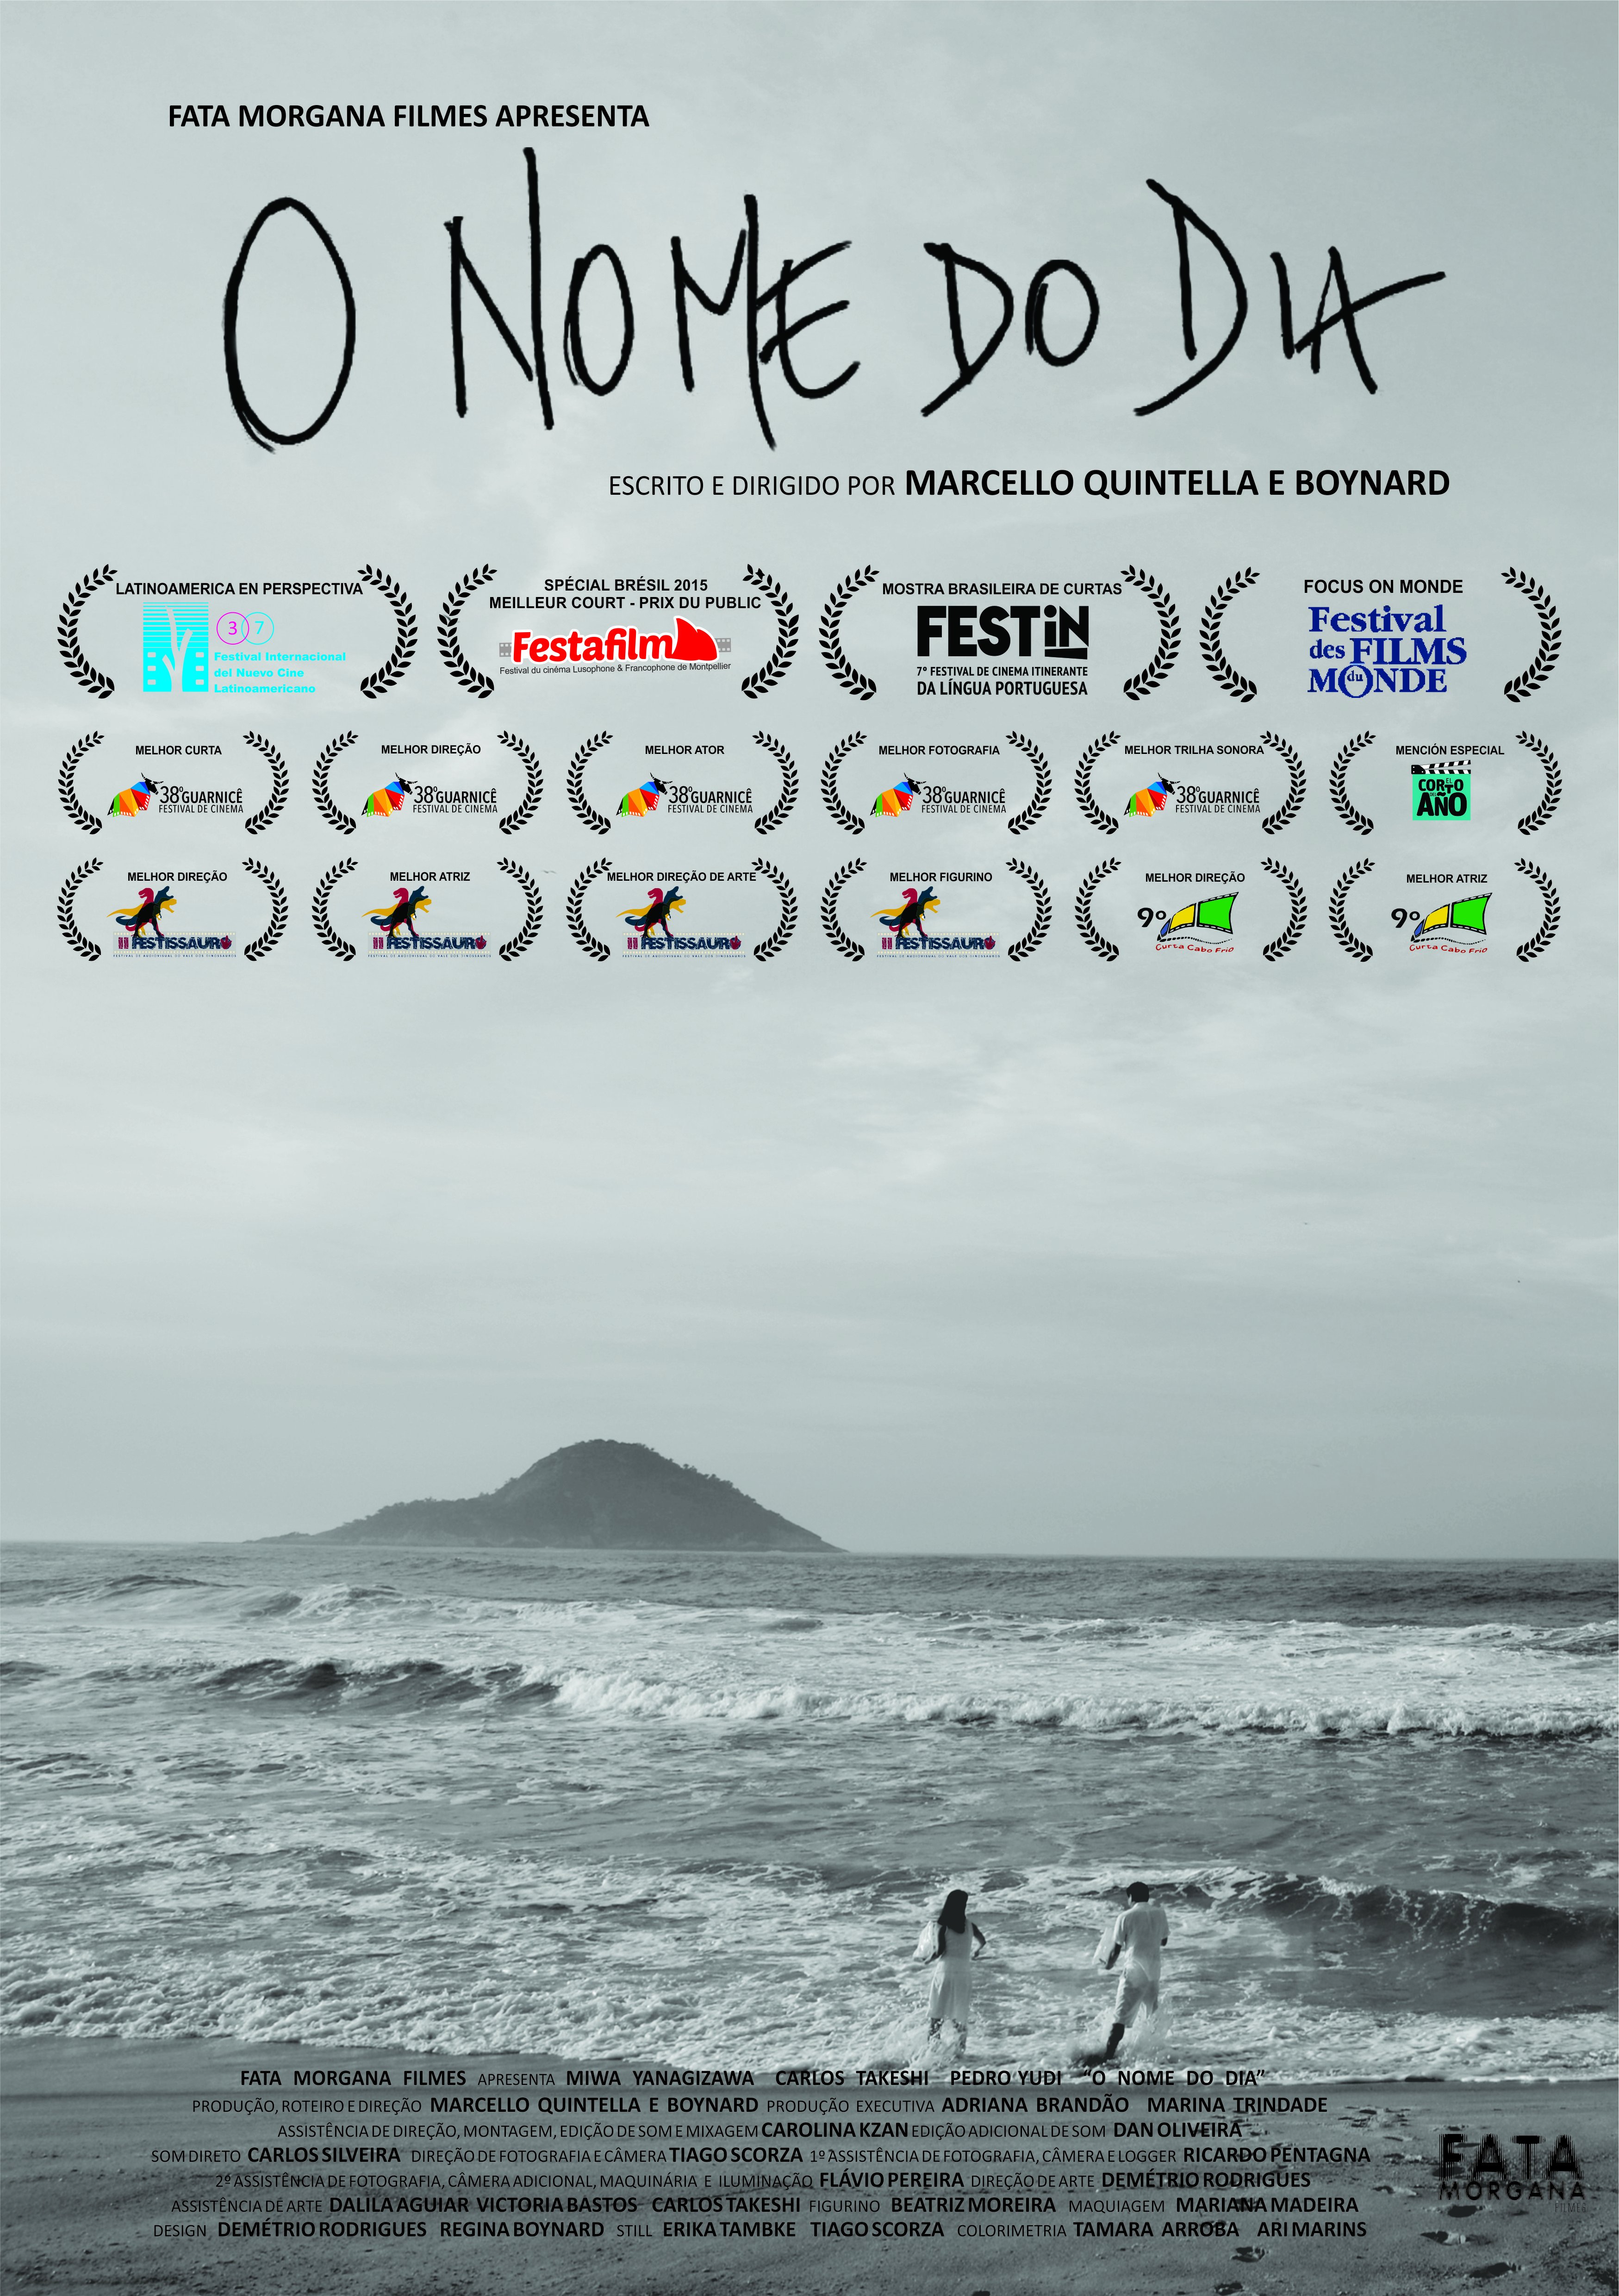 O Nome Do Dia film at the iChill Manila International Film Fest Jan 2018